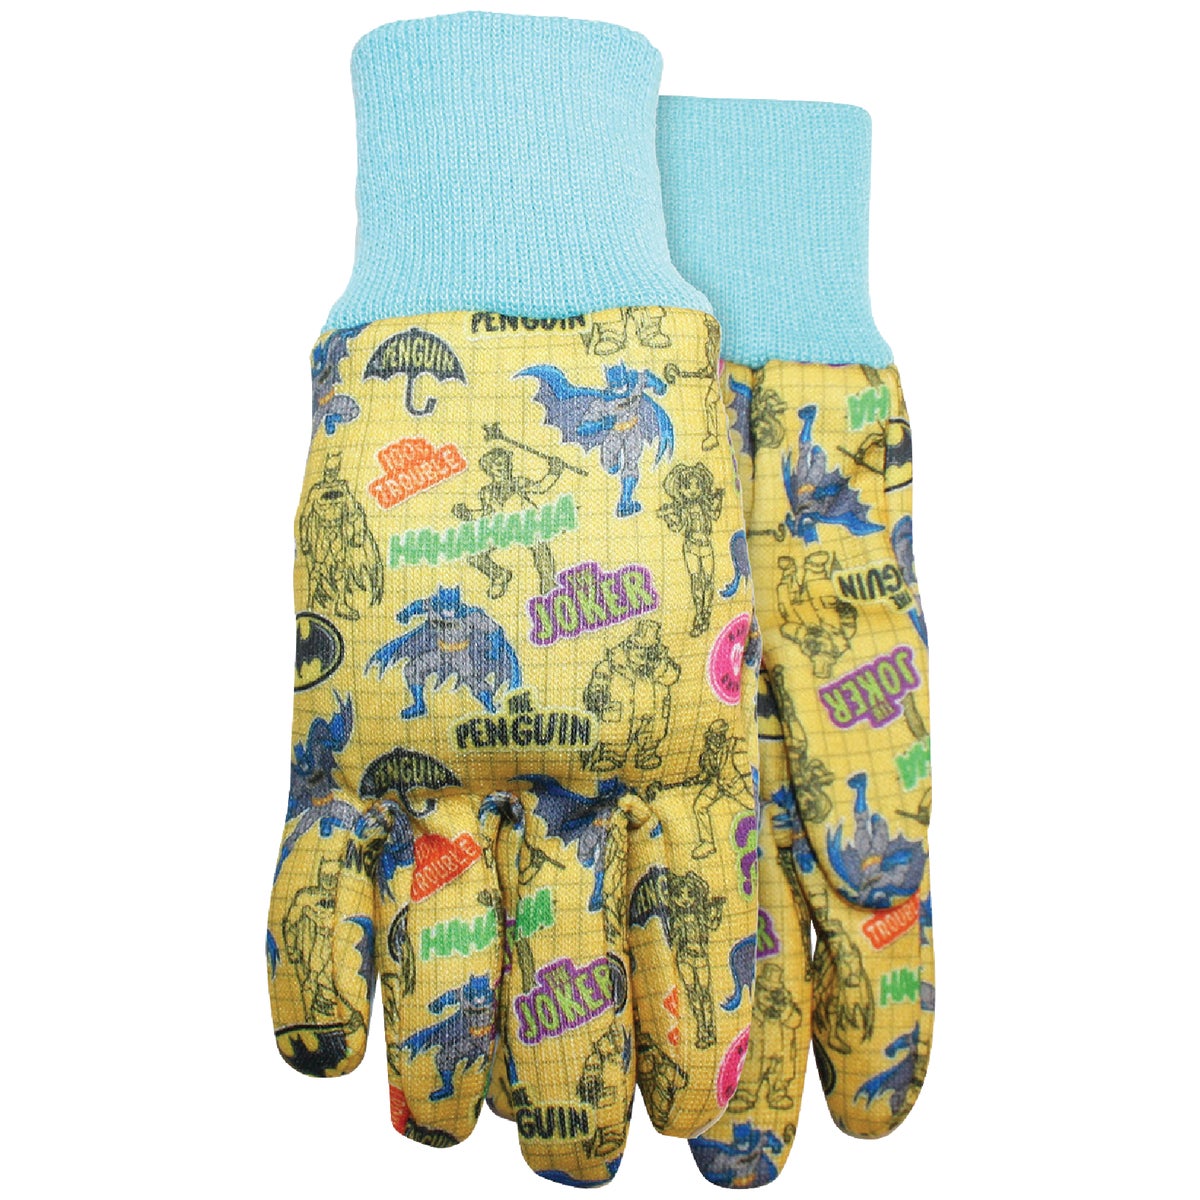 Item 719490, Toddler size 100% jersey knitted garden glove.